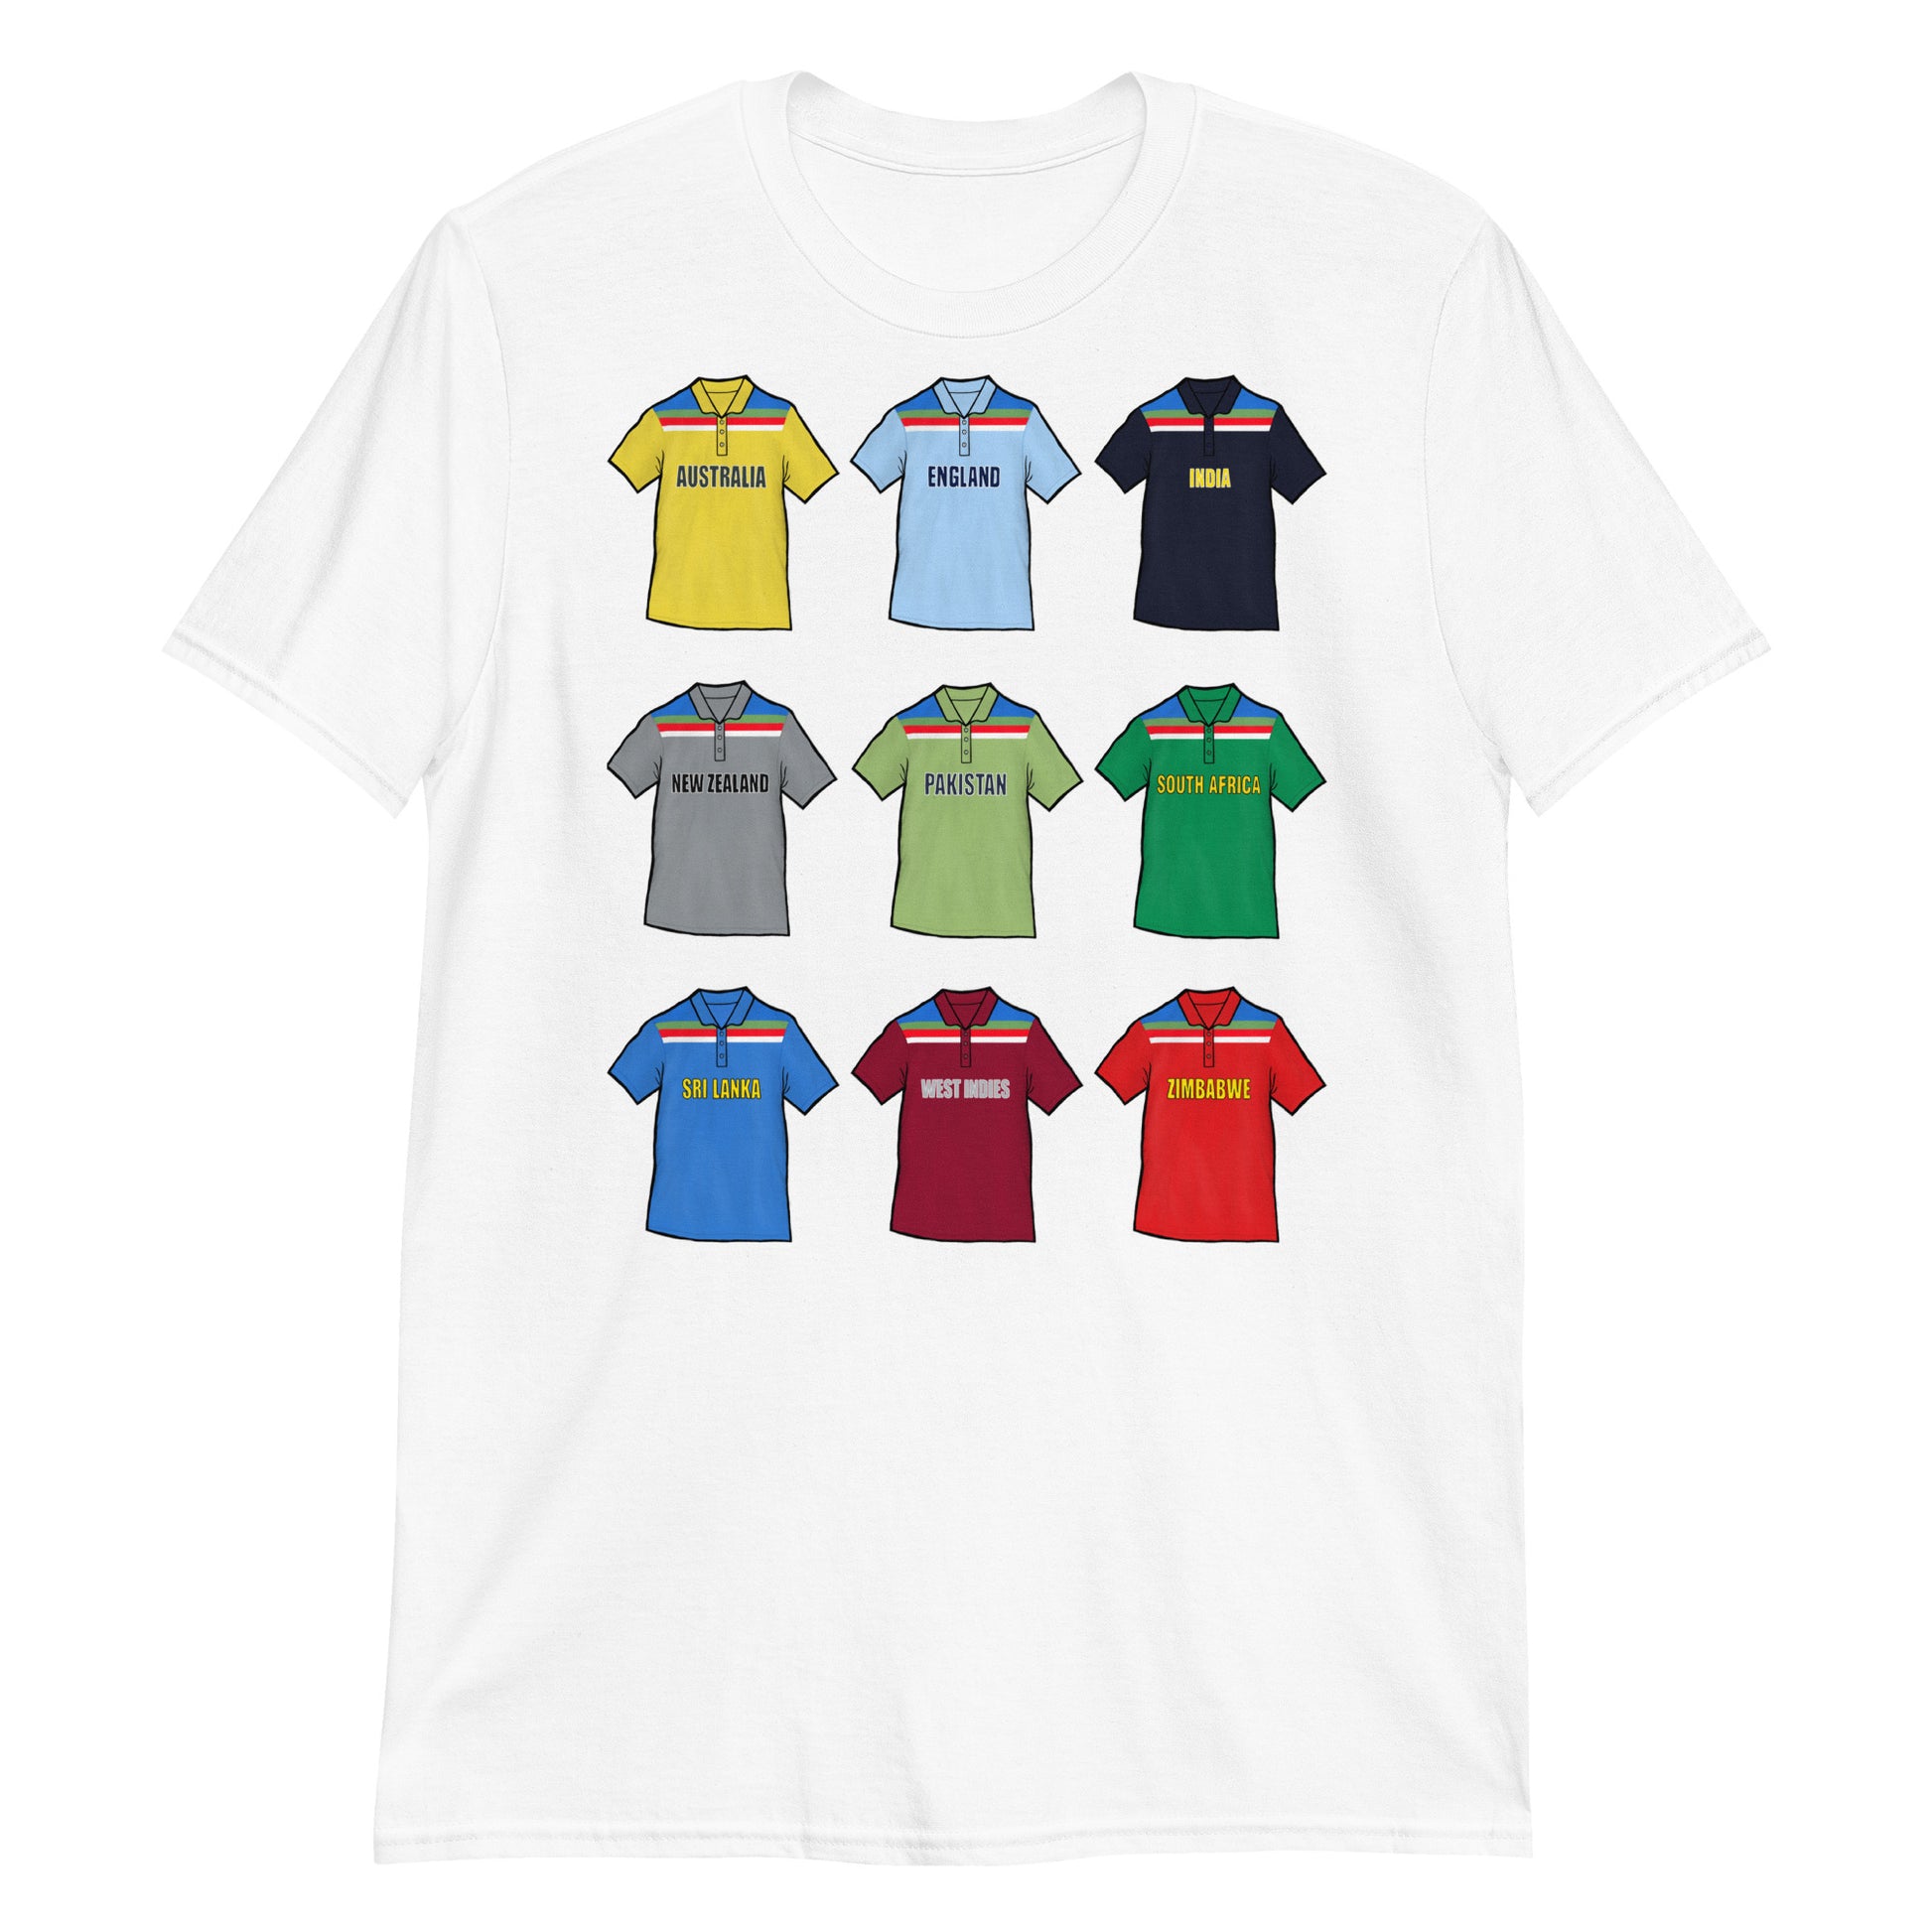 White Cricket T-shirt with illustrated artwork on them. Featuring nations Australia, England, India, New Zealand, Pakistan, South Africa, Sri Lanka, West Indies & Zimbabwe